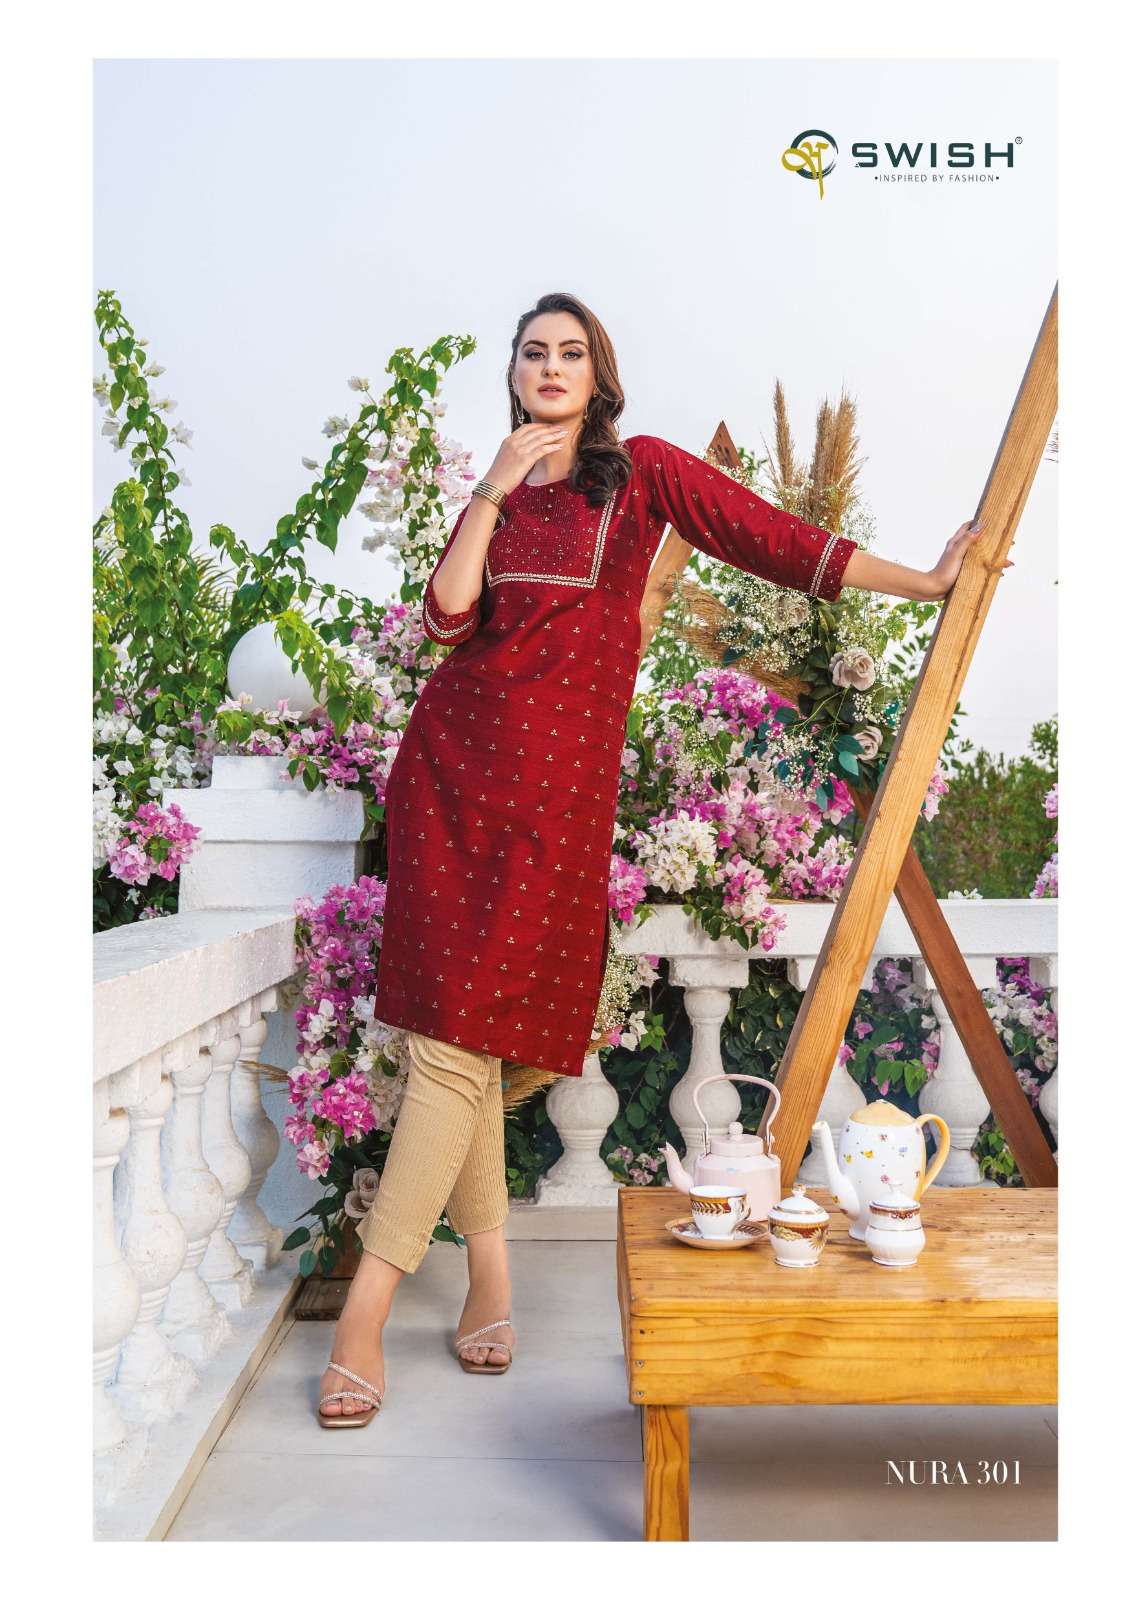 Stylish New Fashion Cream Cotton Kurti With Long Shrug For Girls 2020 |  Fashion, New kurti designs, Kurti designs